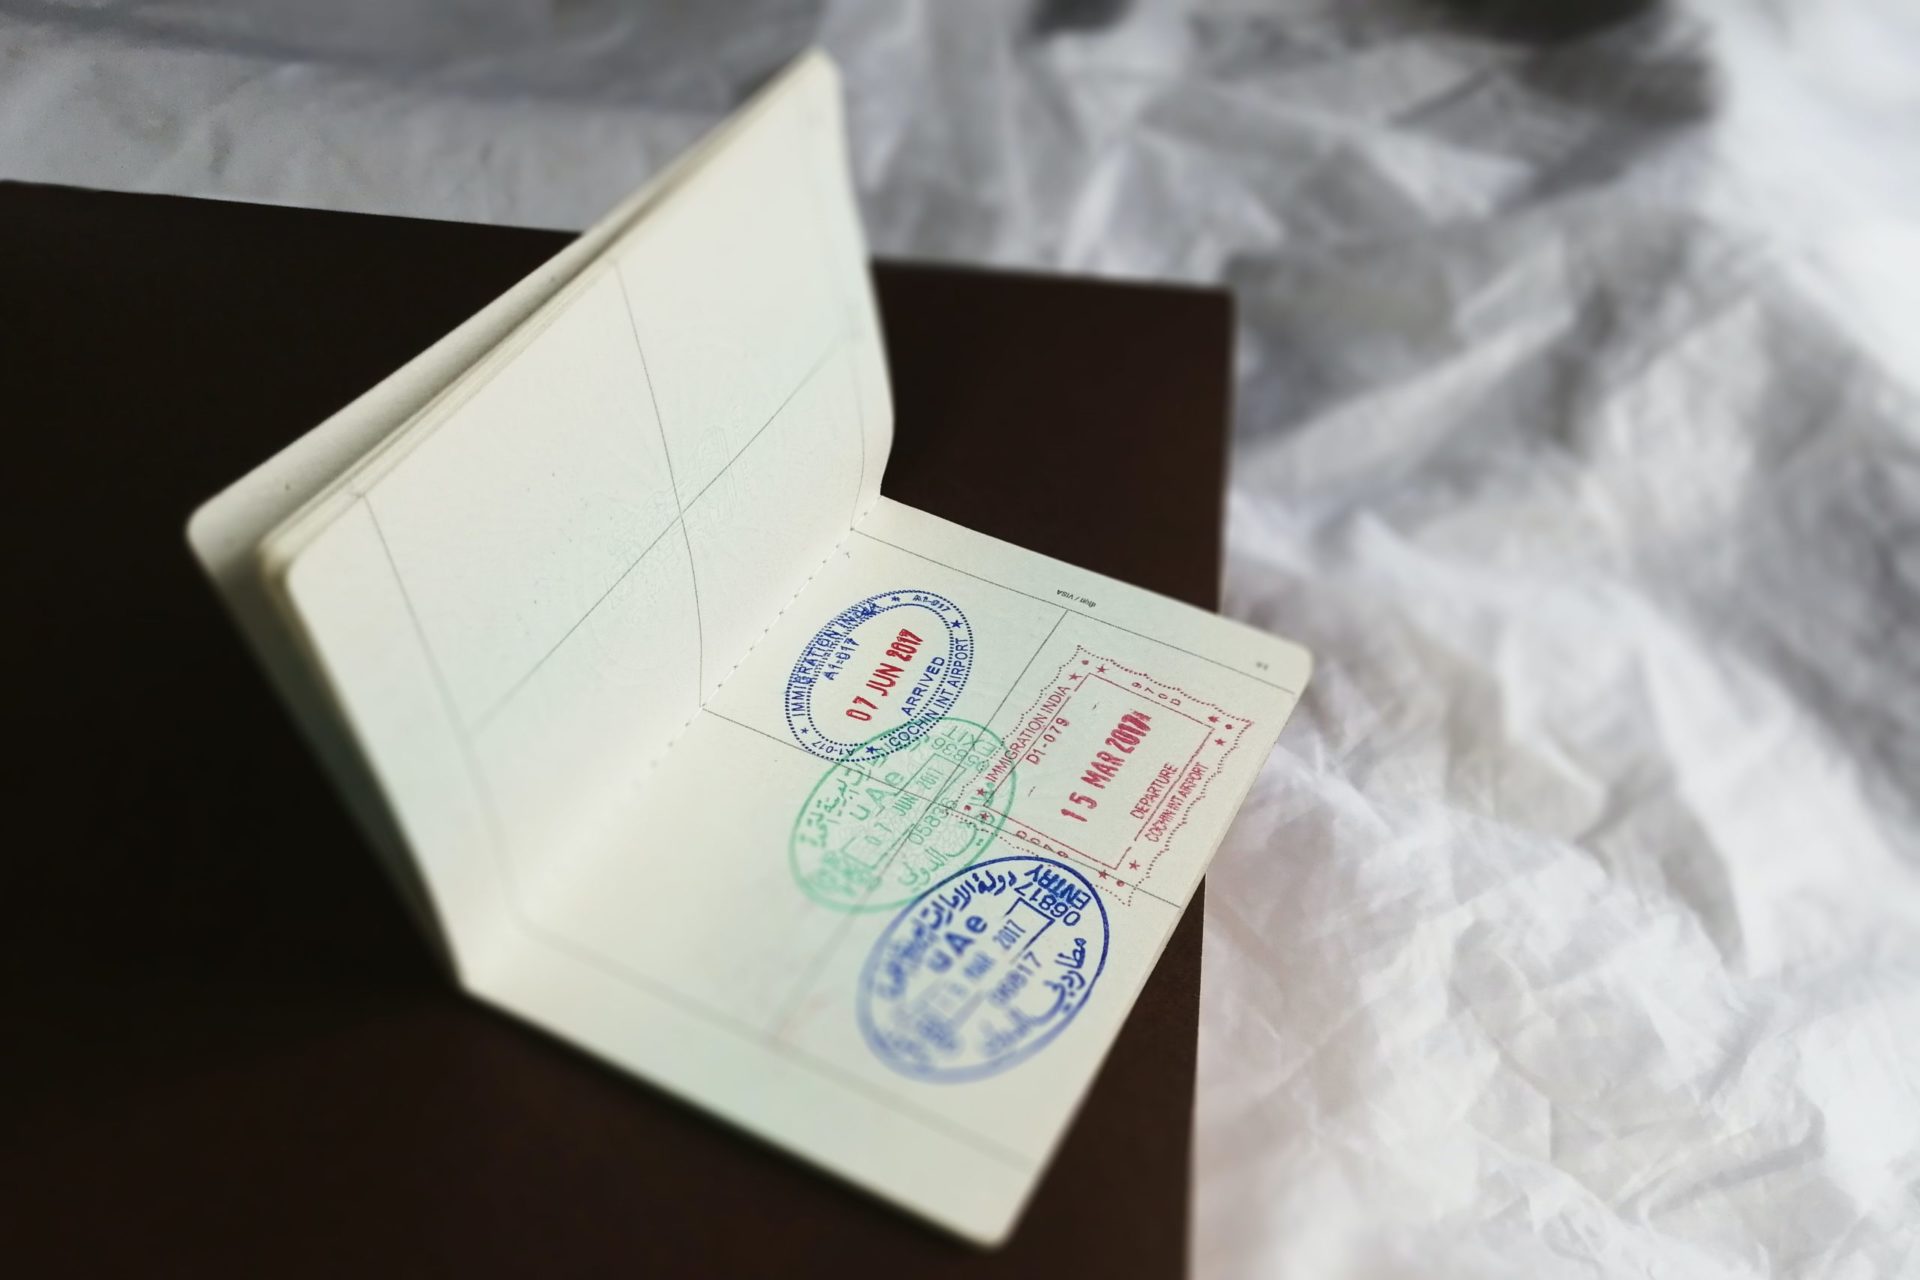 Demander un visa Schengen se fera bientôt 100% en ligne